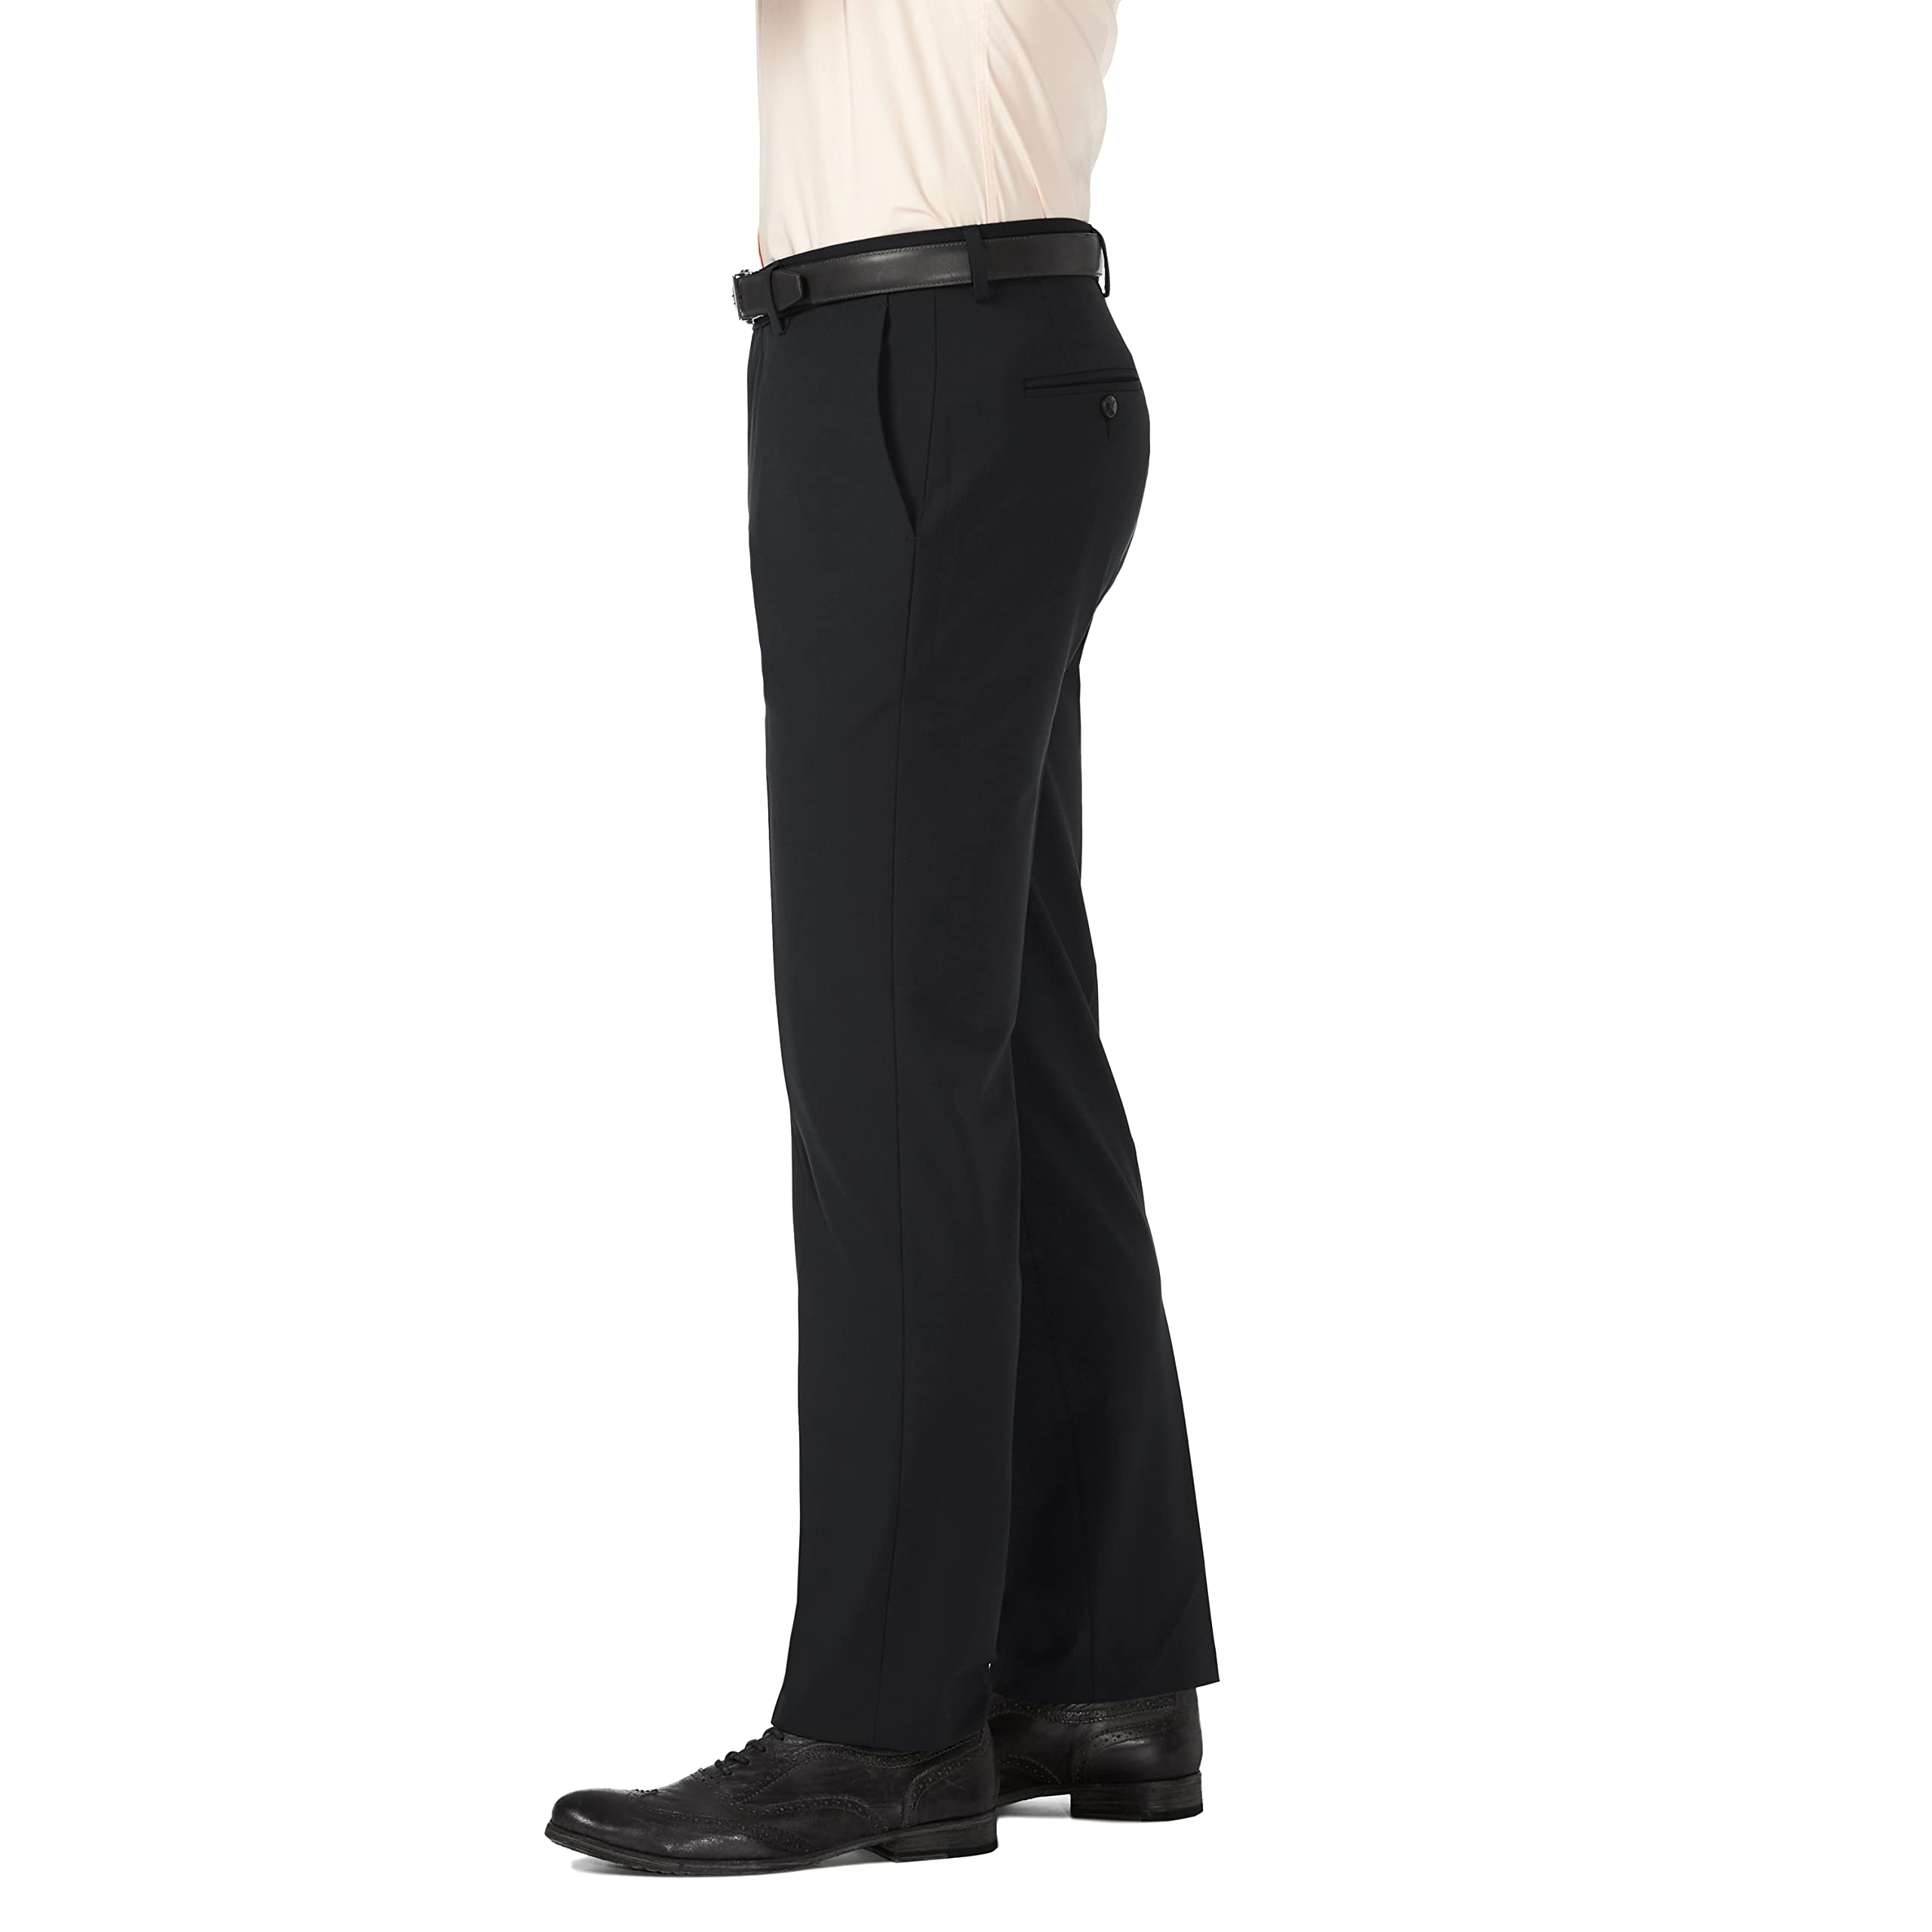 J.M. Haggar Men's 4-Way Stretch Dress Pant - Slim Fit Flat Front